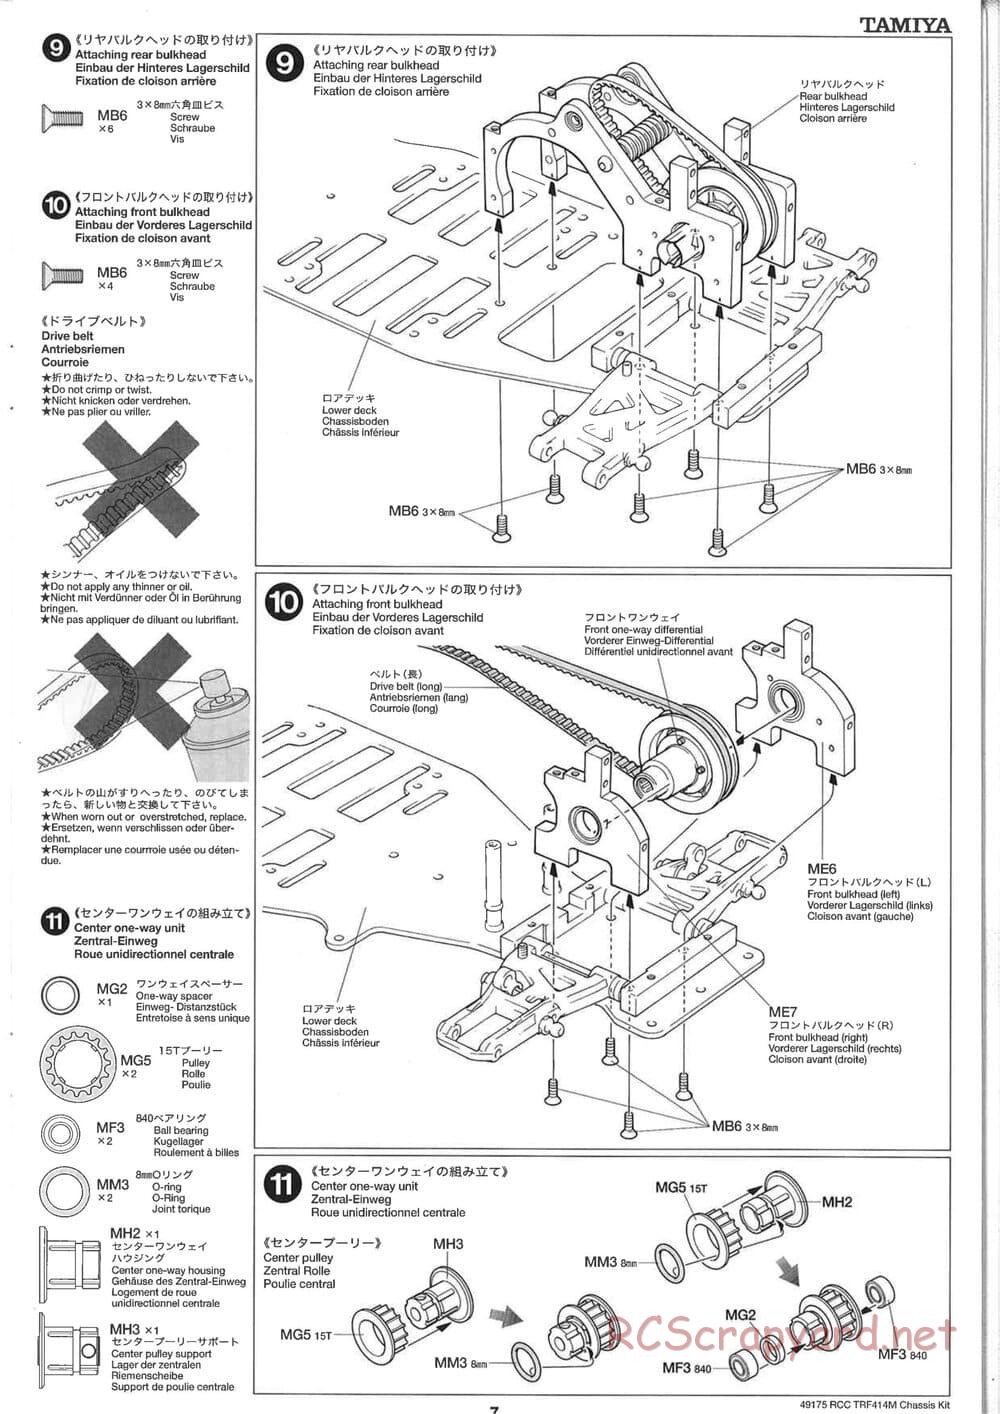 Tamiya - TRF414M Chassis - Manual - Page 7